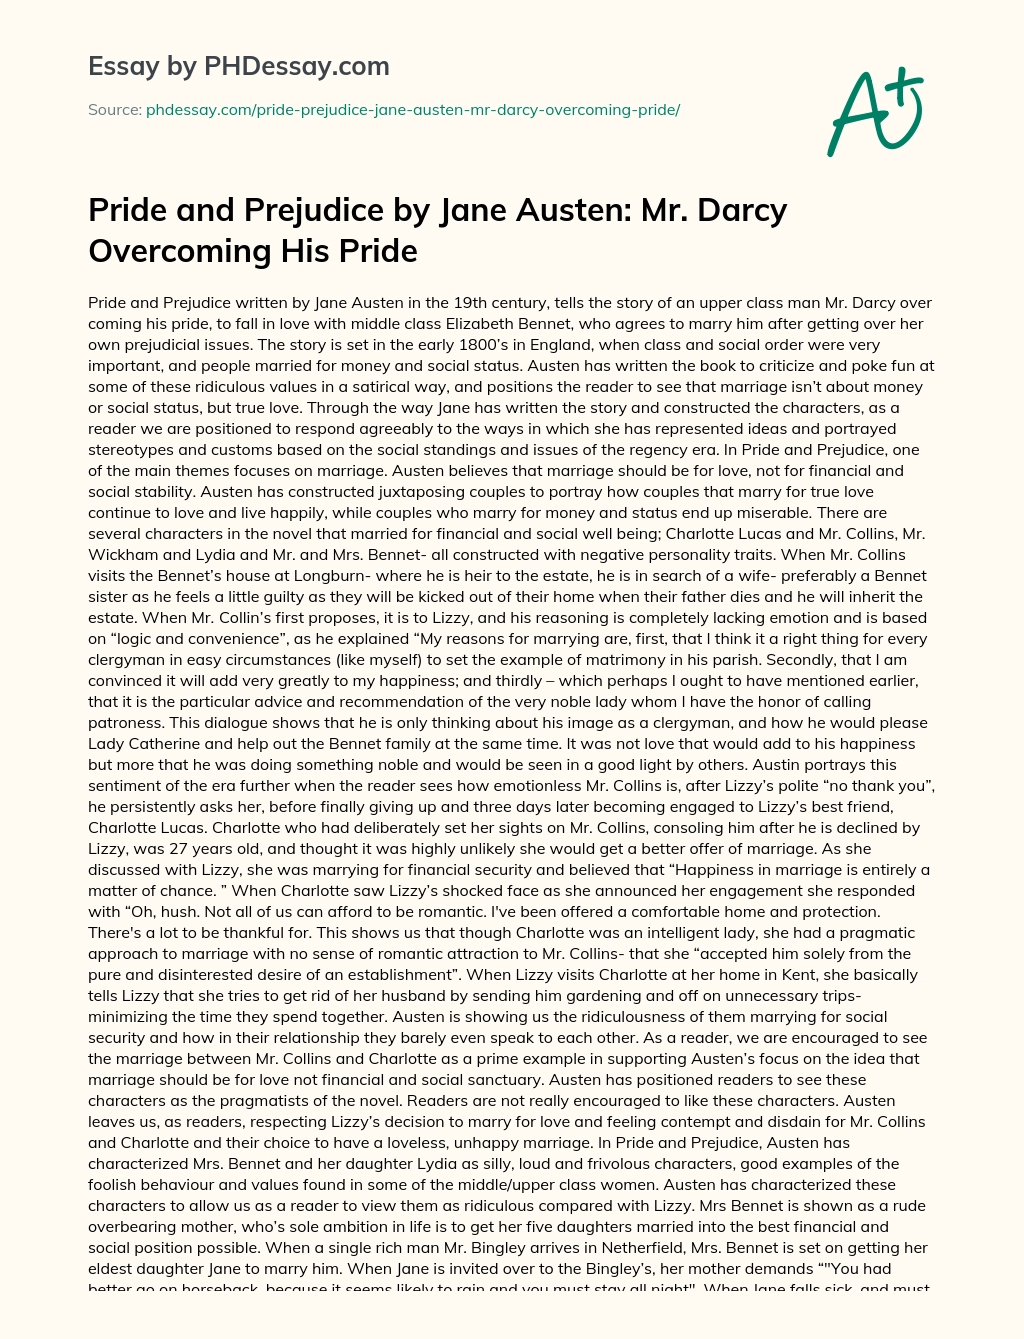 Pride and Prejudice by Jane Austen: Mr. Darcy Overcoming His Pride essay